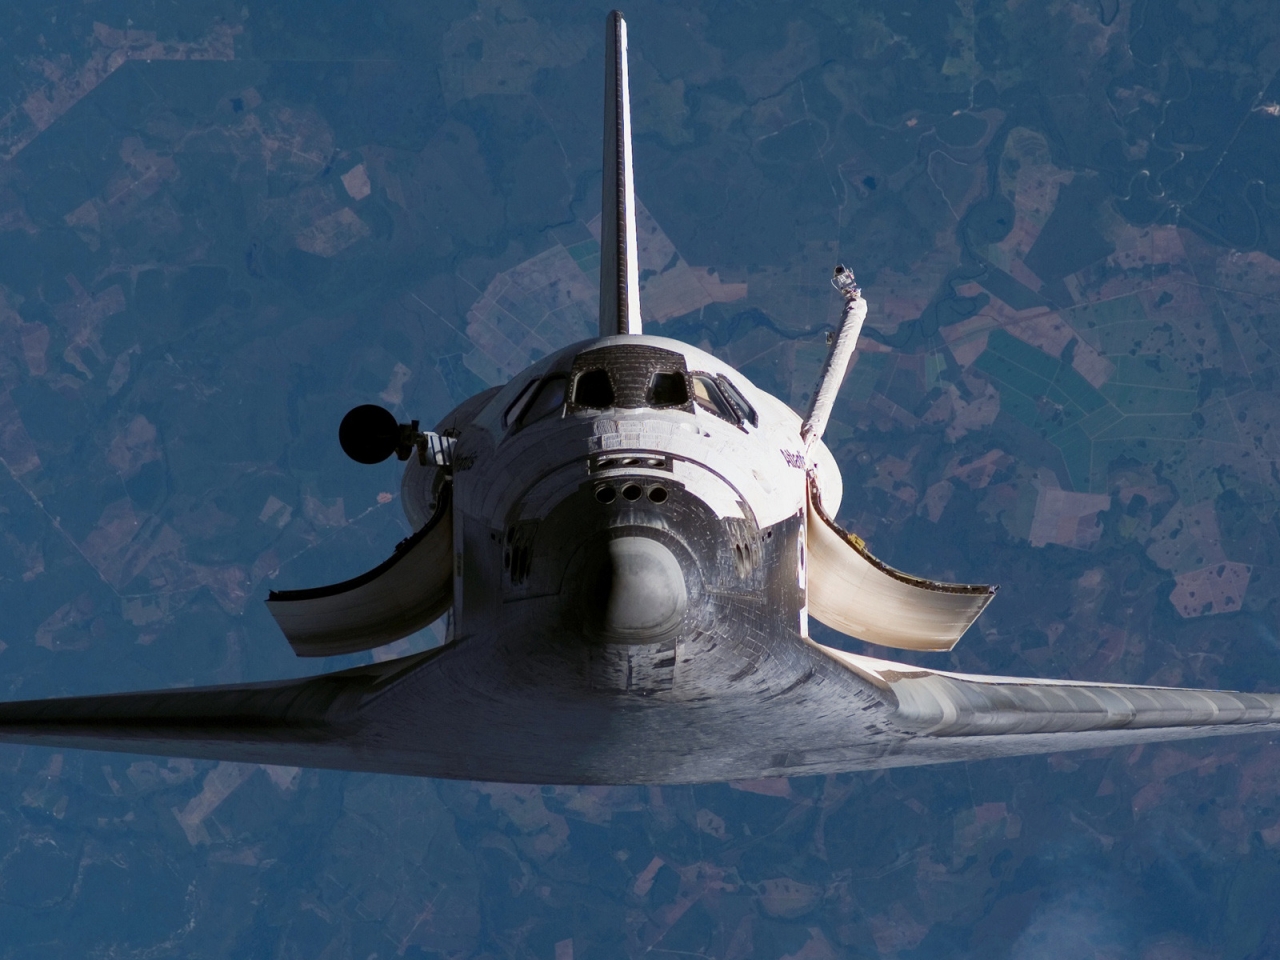 Space shuttle orbit for 1280 x 960 resolution